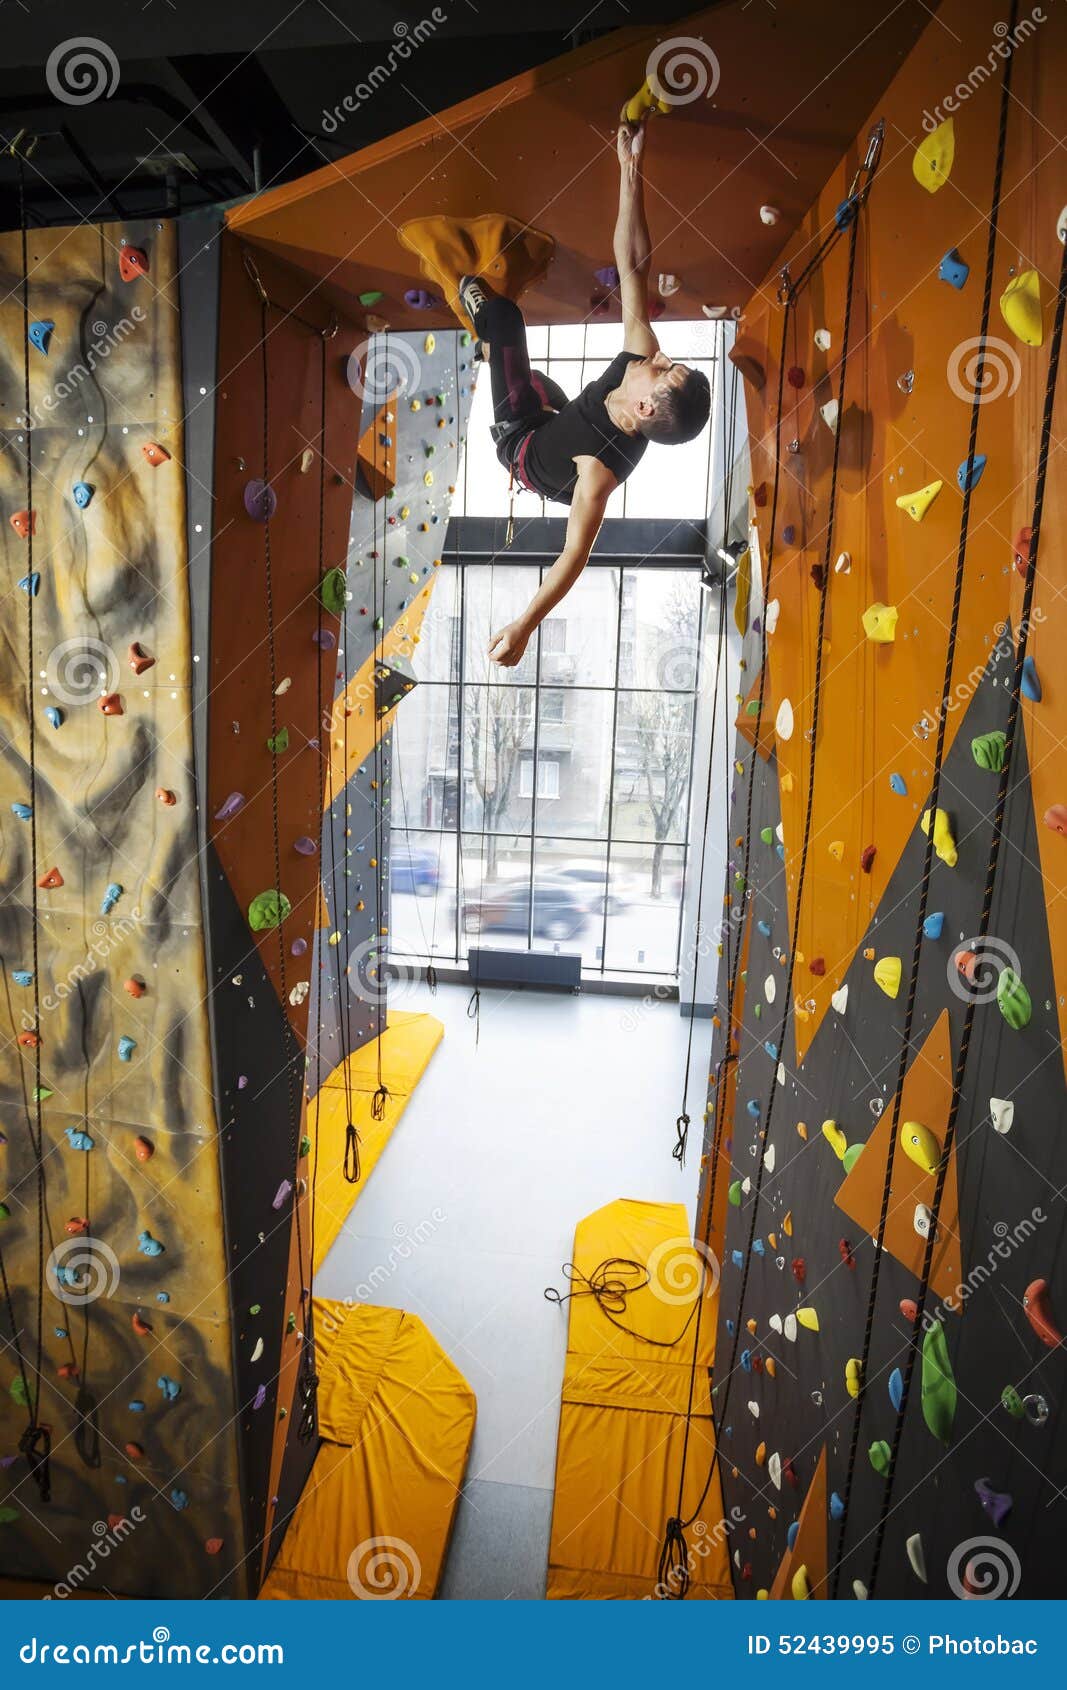 Man Practicing Top Rope Climbing in Climbing Gym Stock Image